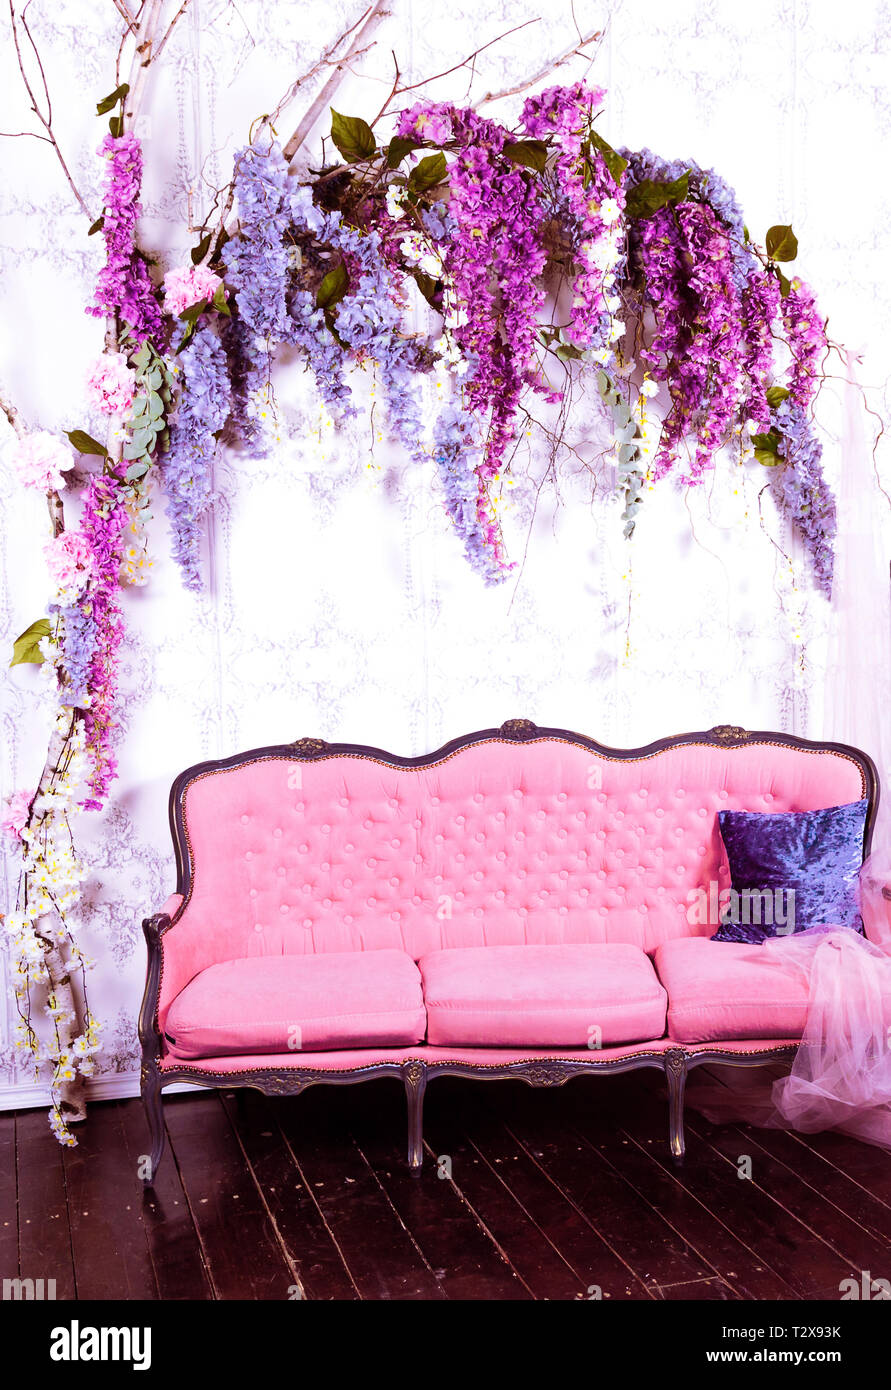 - Kissen beautiful colorful window Sessel Sofa, kolonial lila pillow Photo pattern, Stock wood, Holz Couch, Muster Alamy purple,